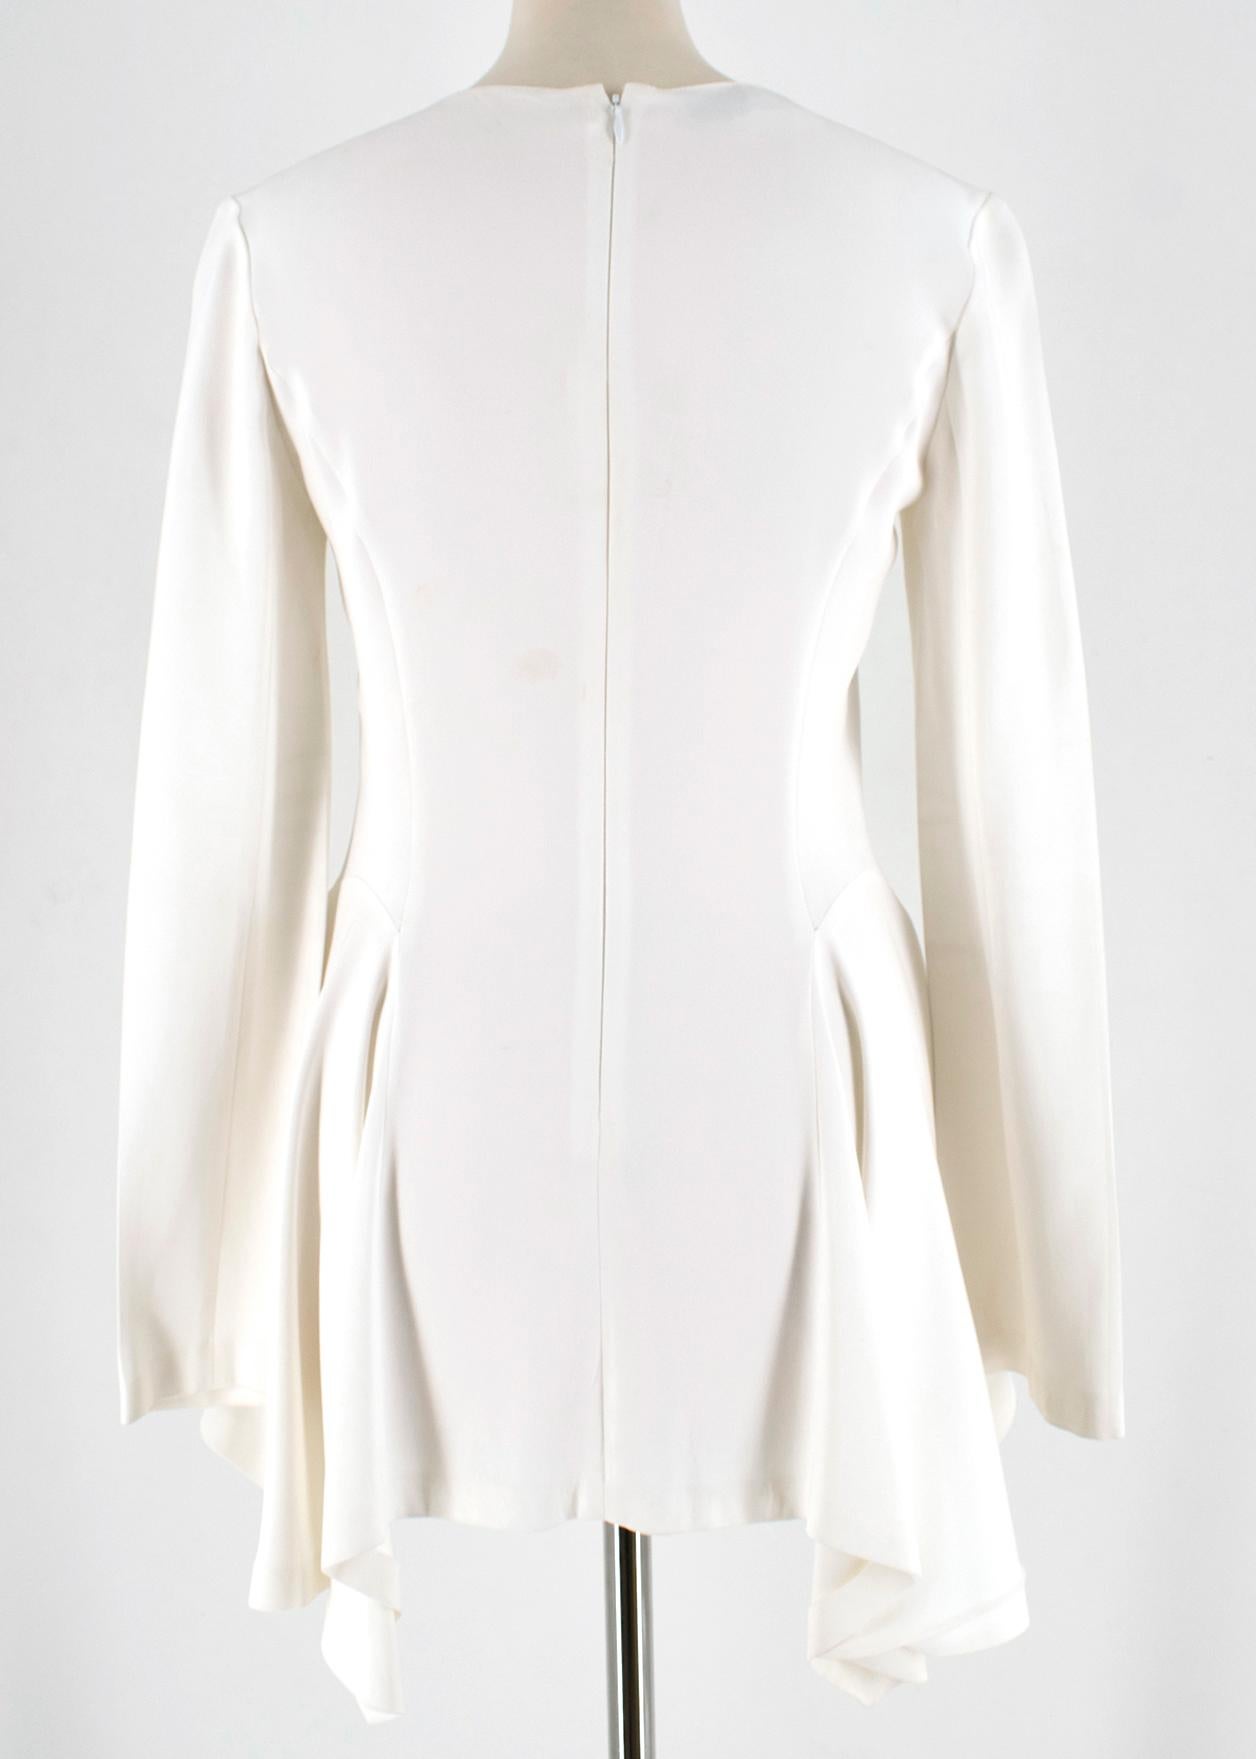 stella mccartney white blouse